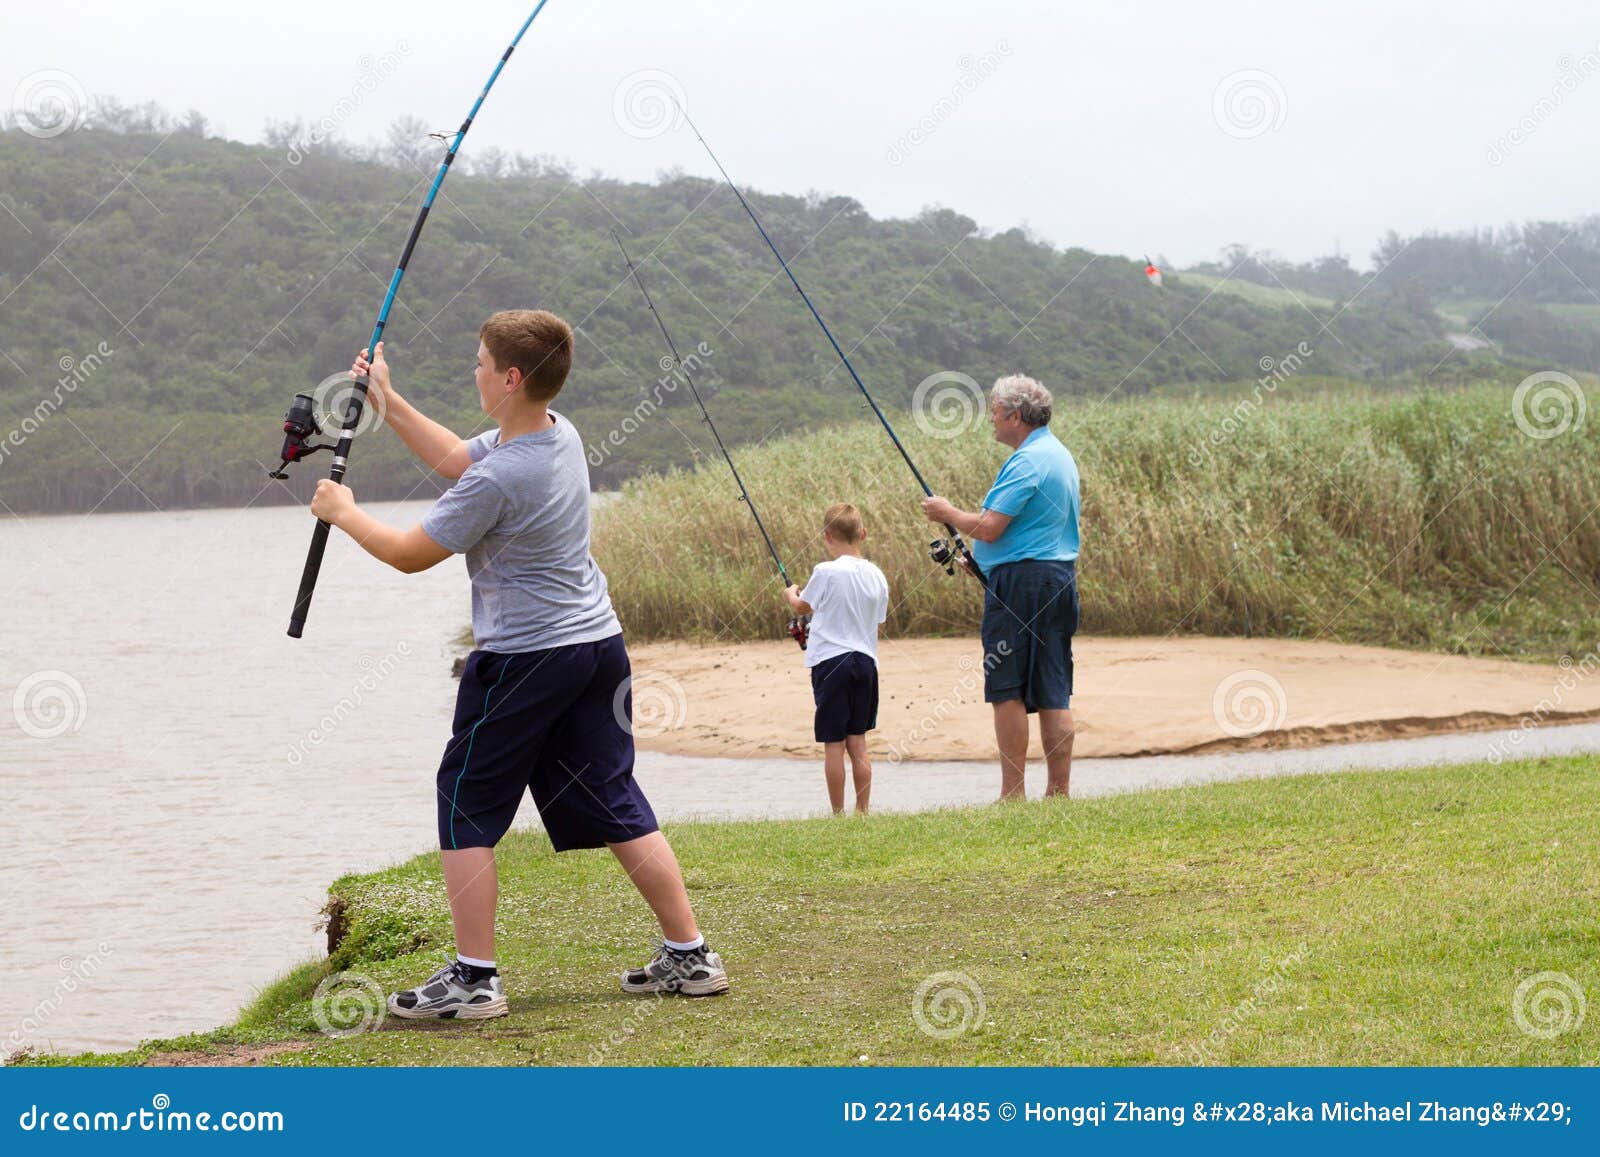 Boy casting fishing rod stock image. Image of casting - 22164485